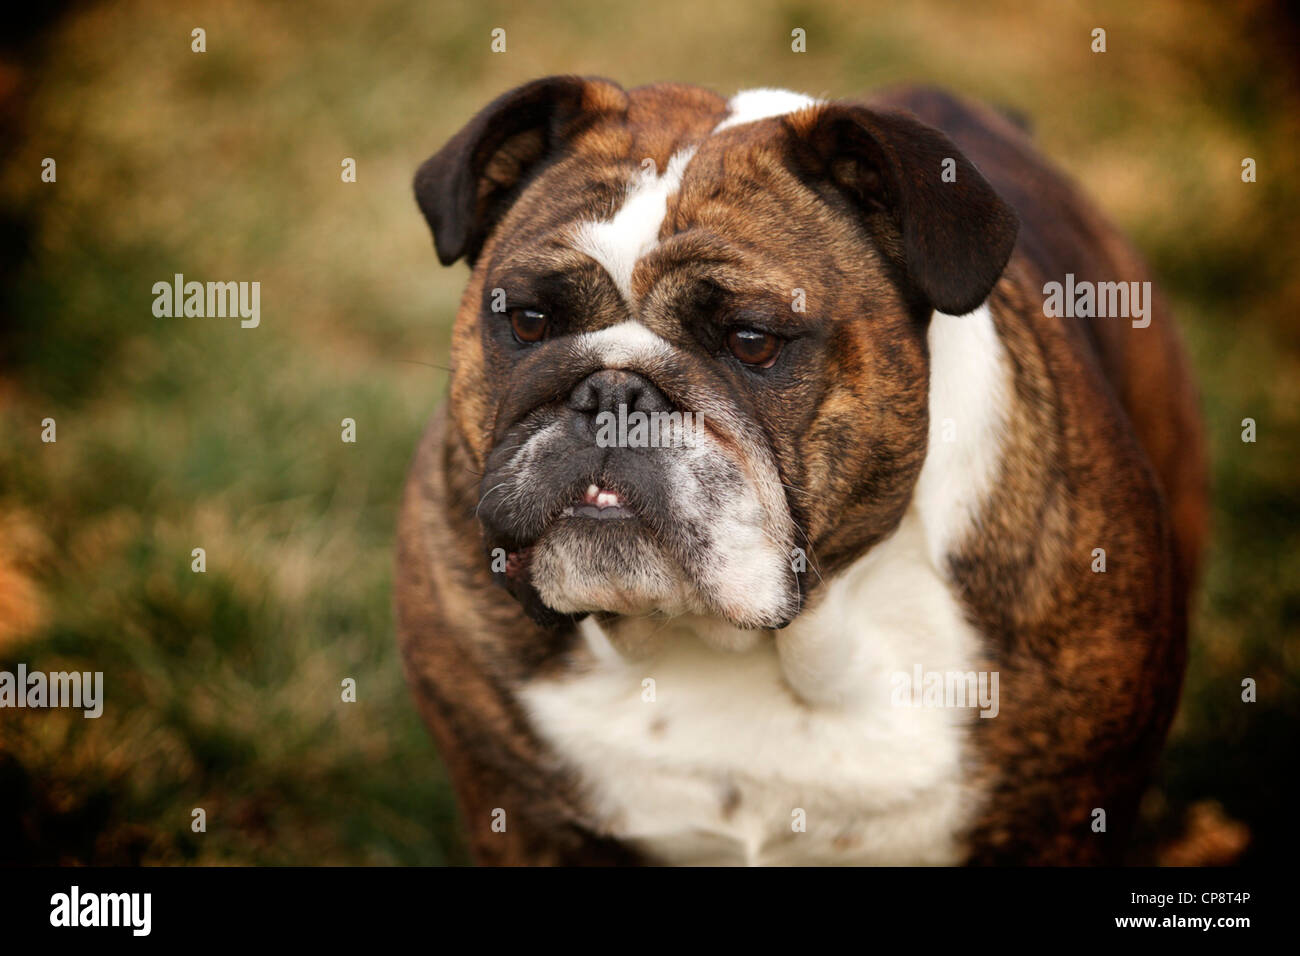 English Bulldog outside in the grass Stock Photo